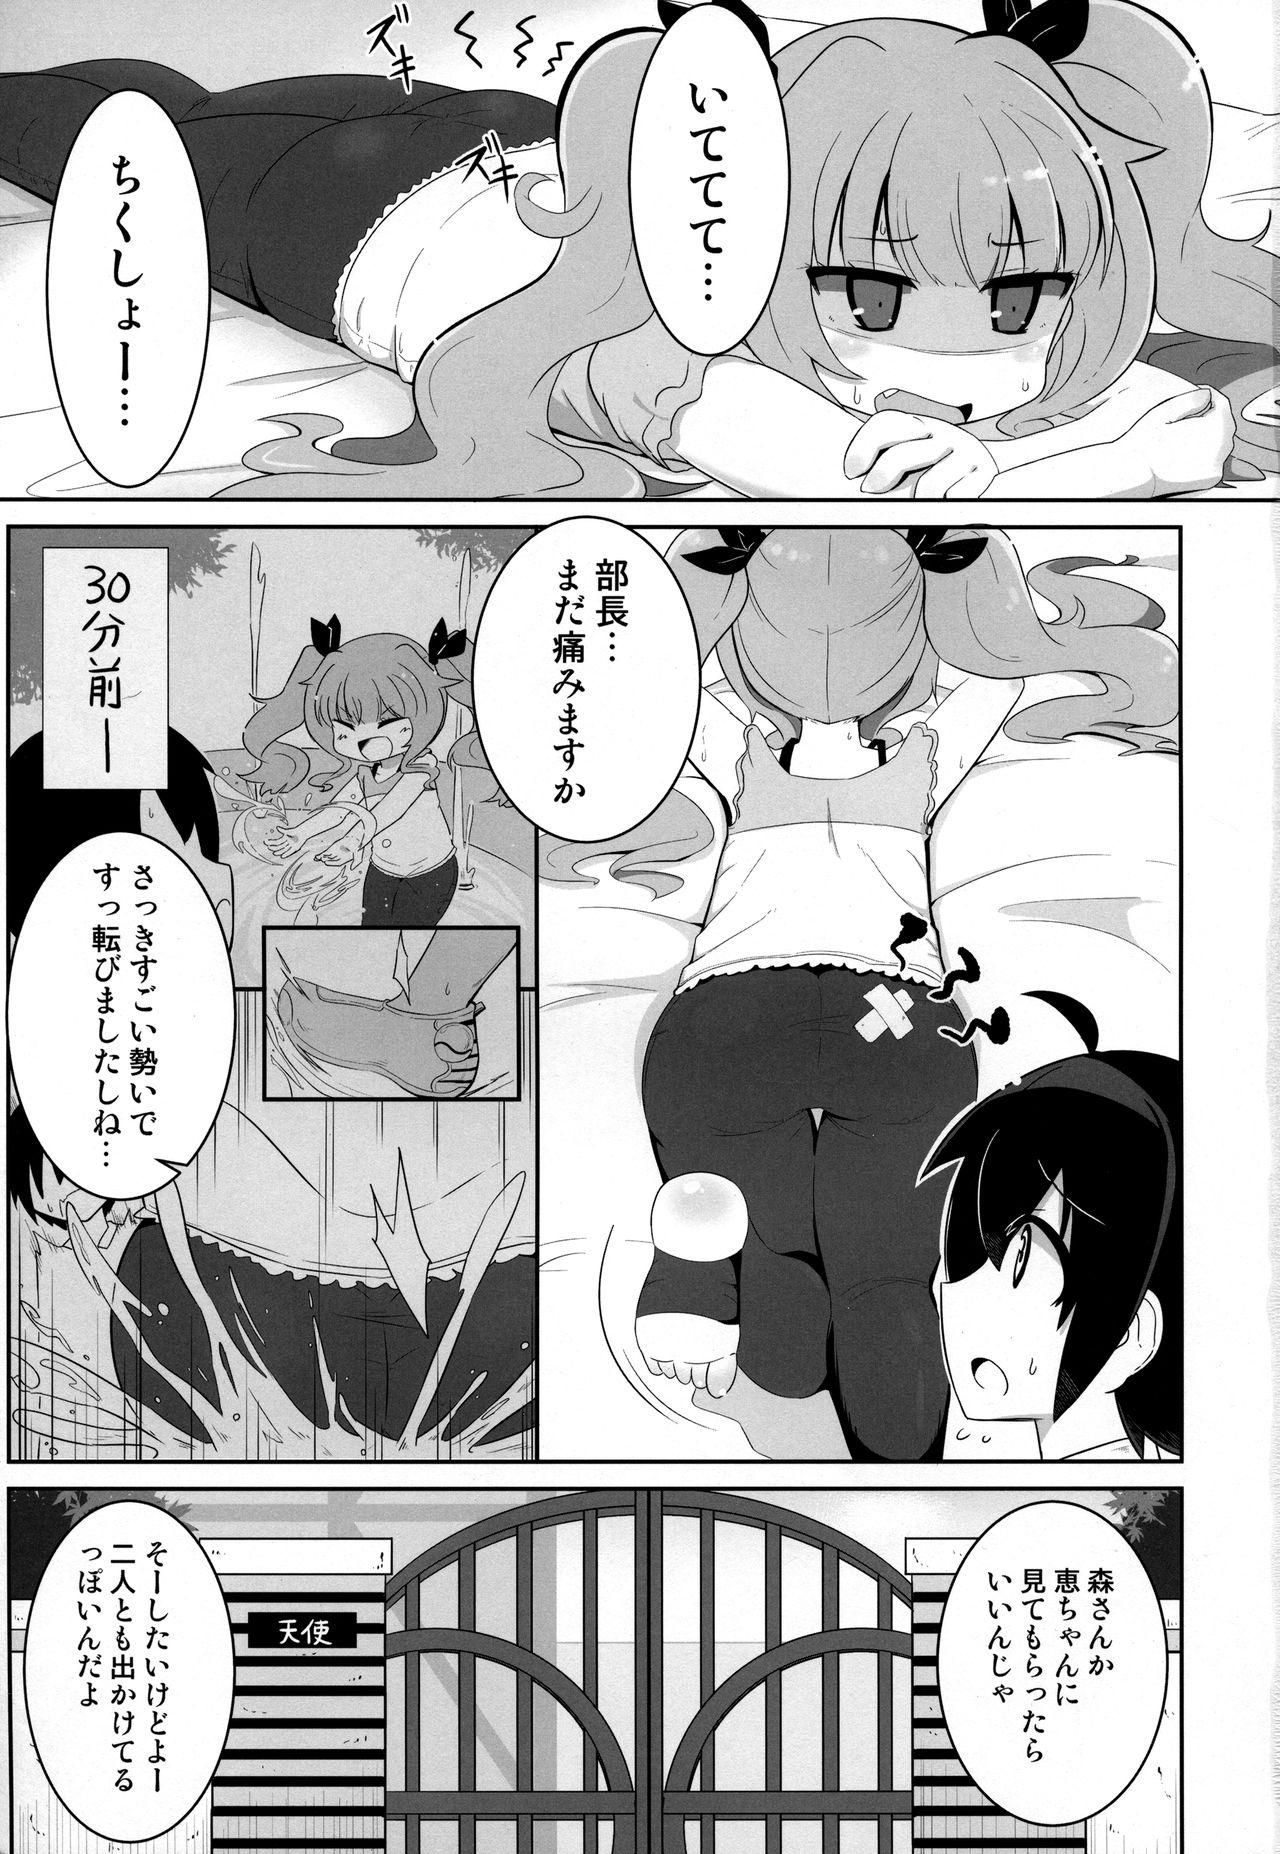 Caught Maa-chan Over!! - Gj-bu Bra - Page 2